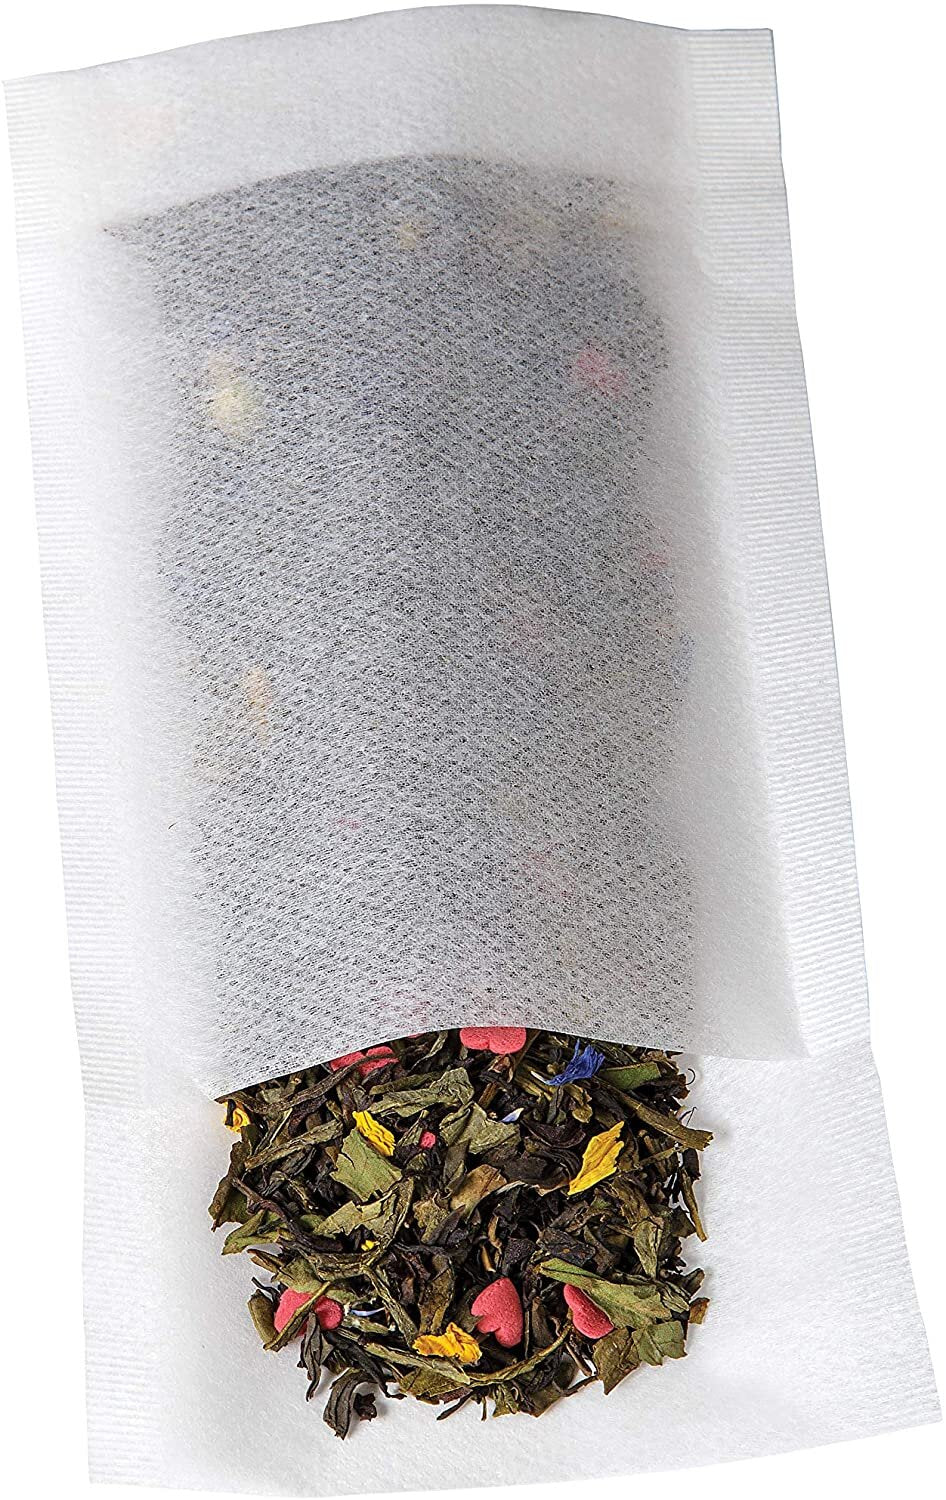 Small #1 T-Sac Tea Filter Bags